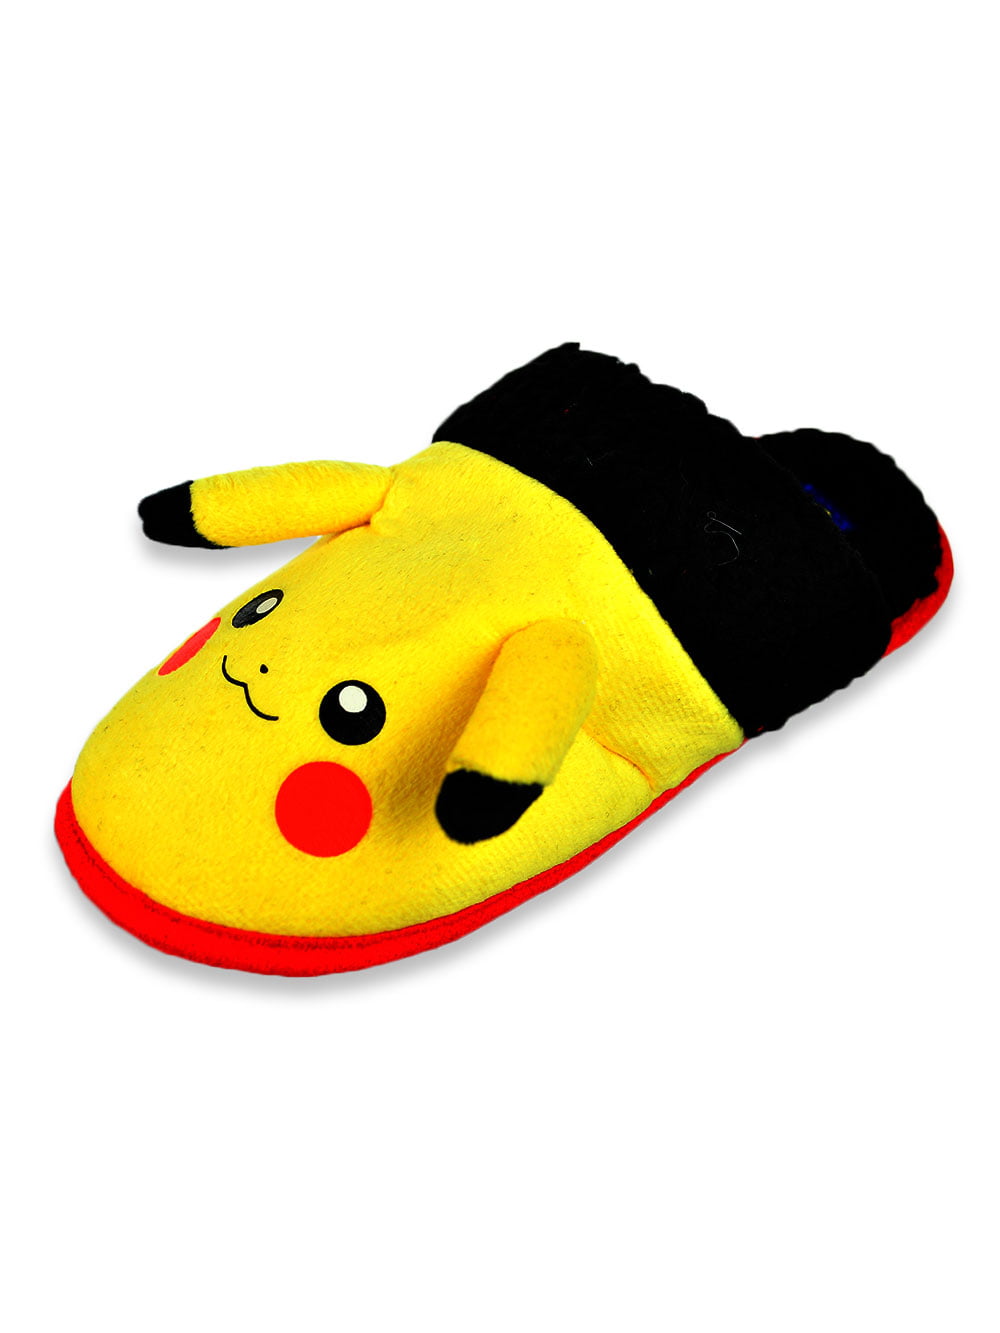 Boys Pokemon Novelty Character Slippers